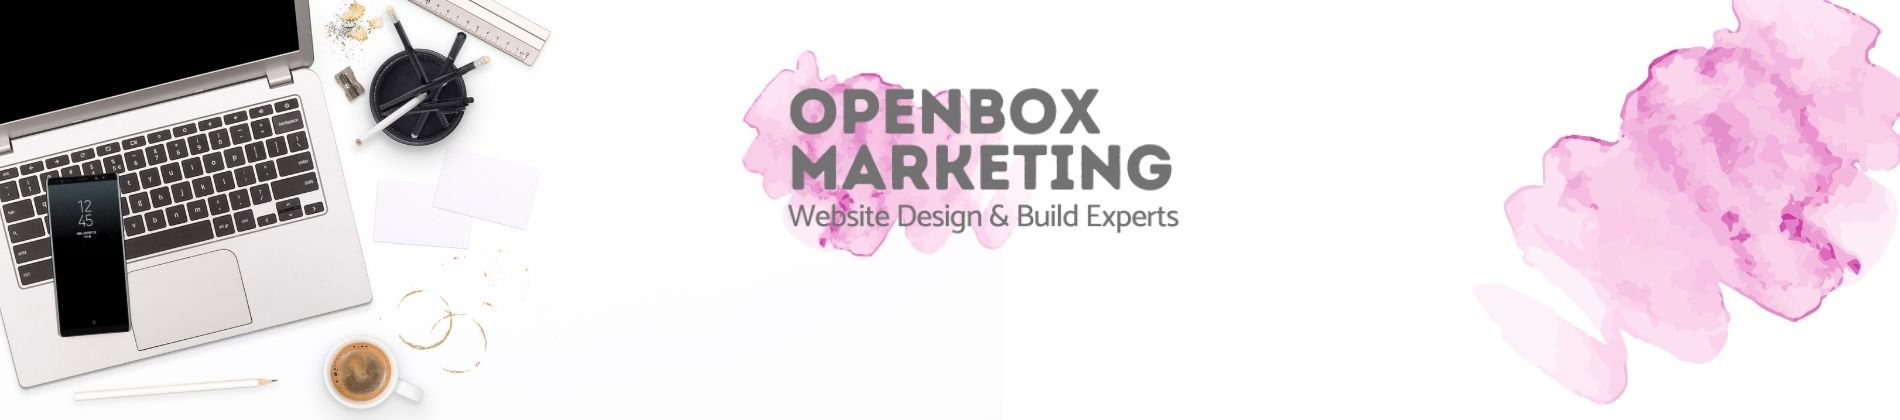 Openbox Marketing Banner roxburgh.guide